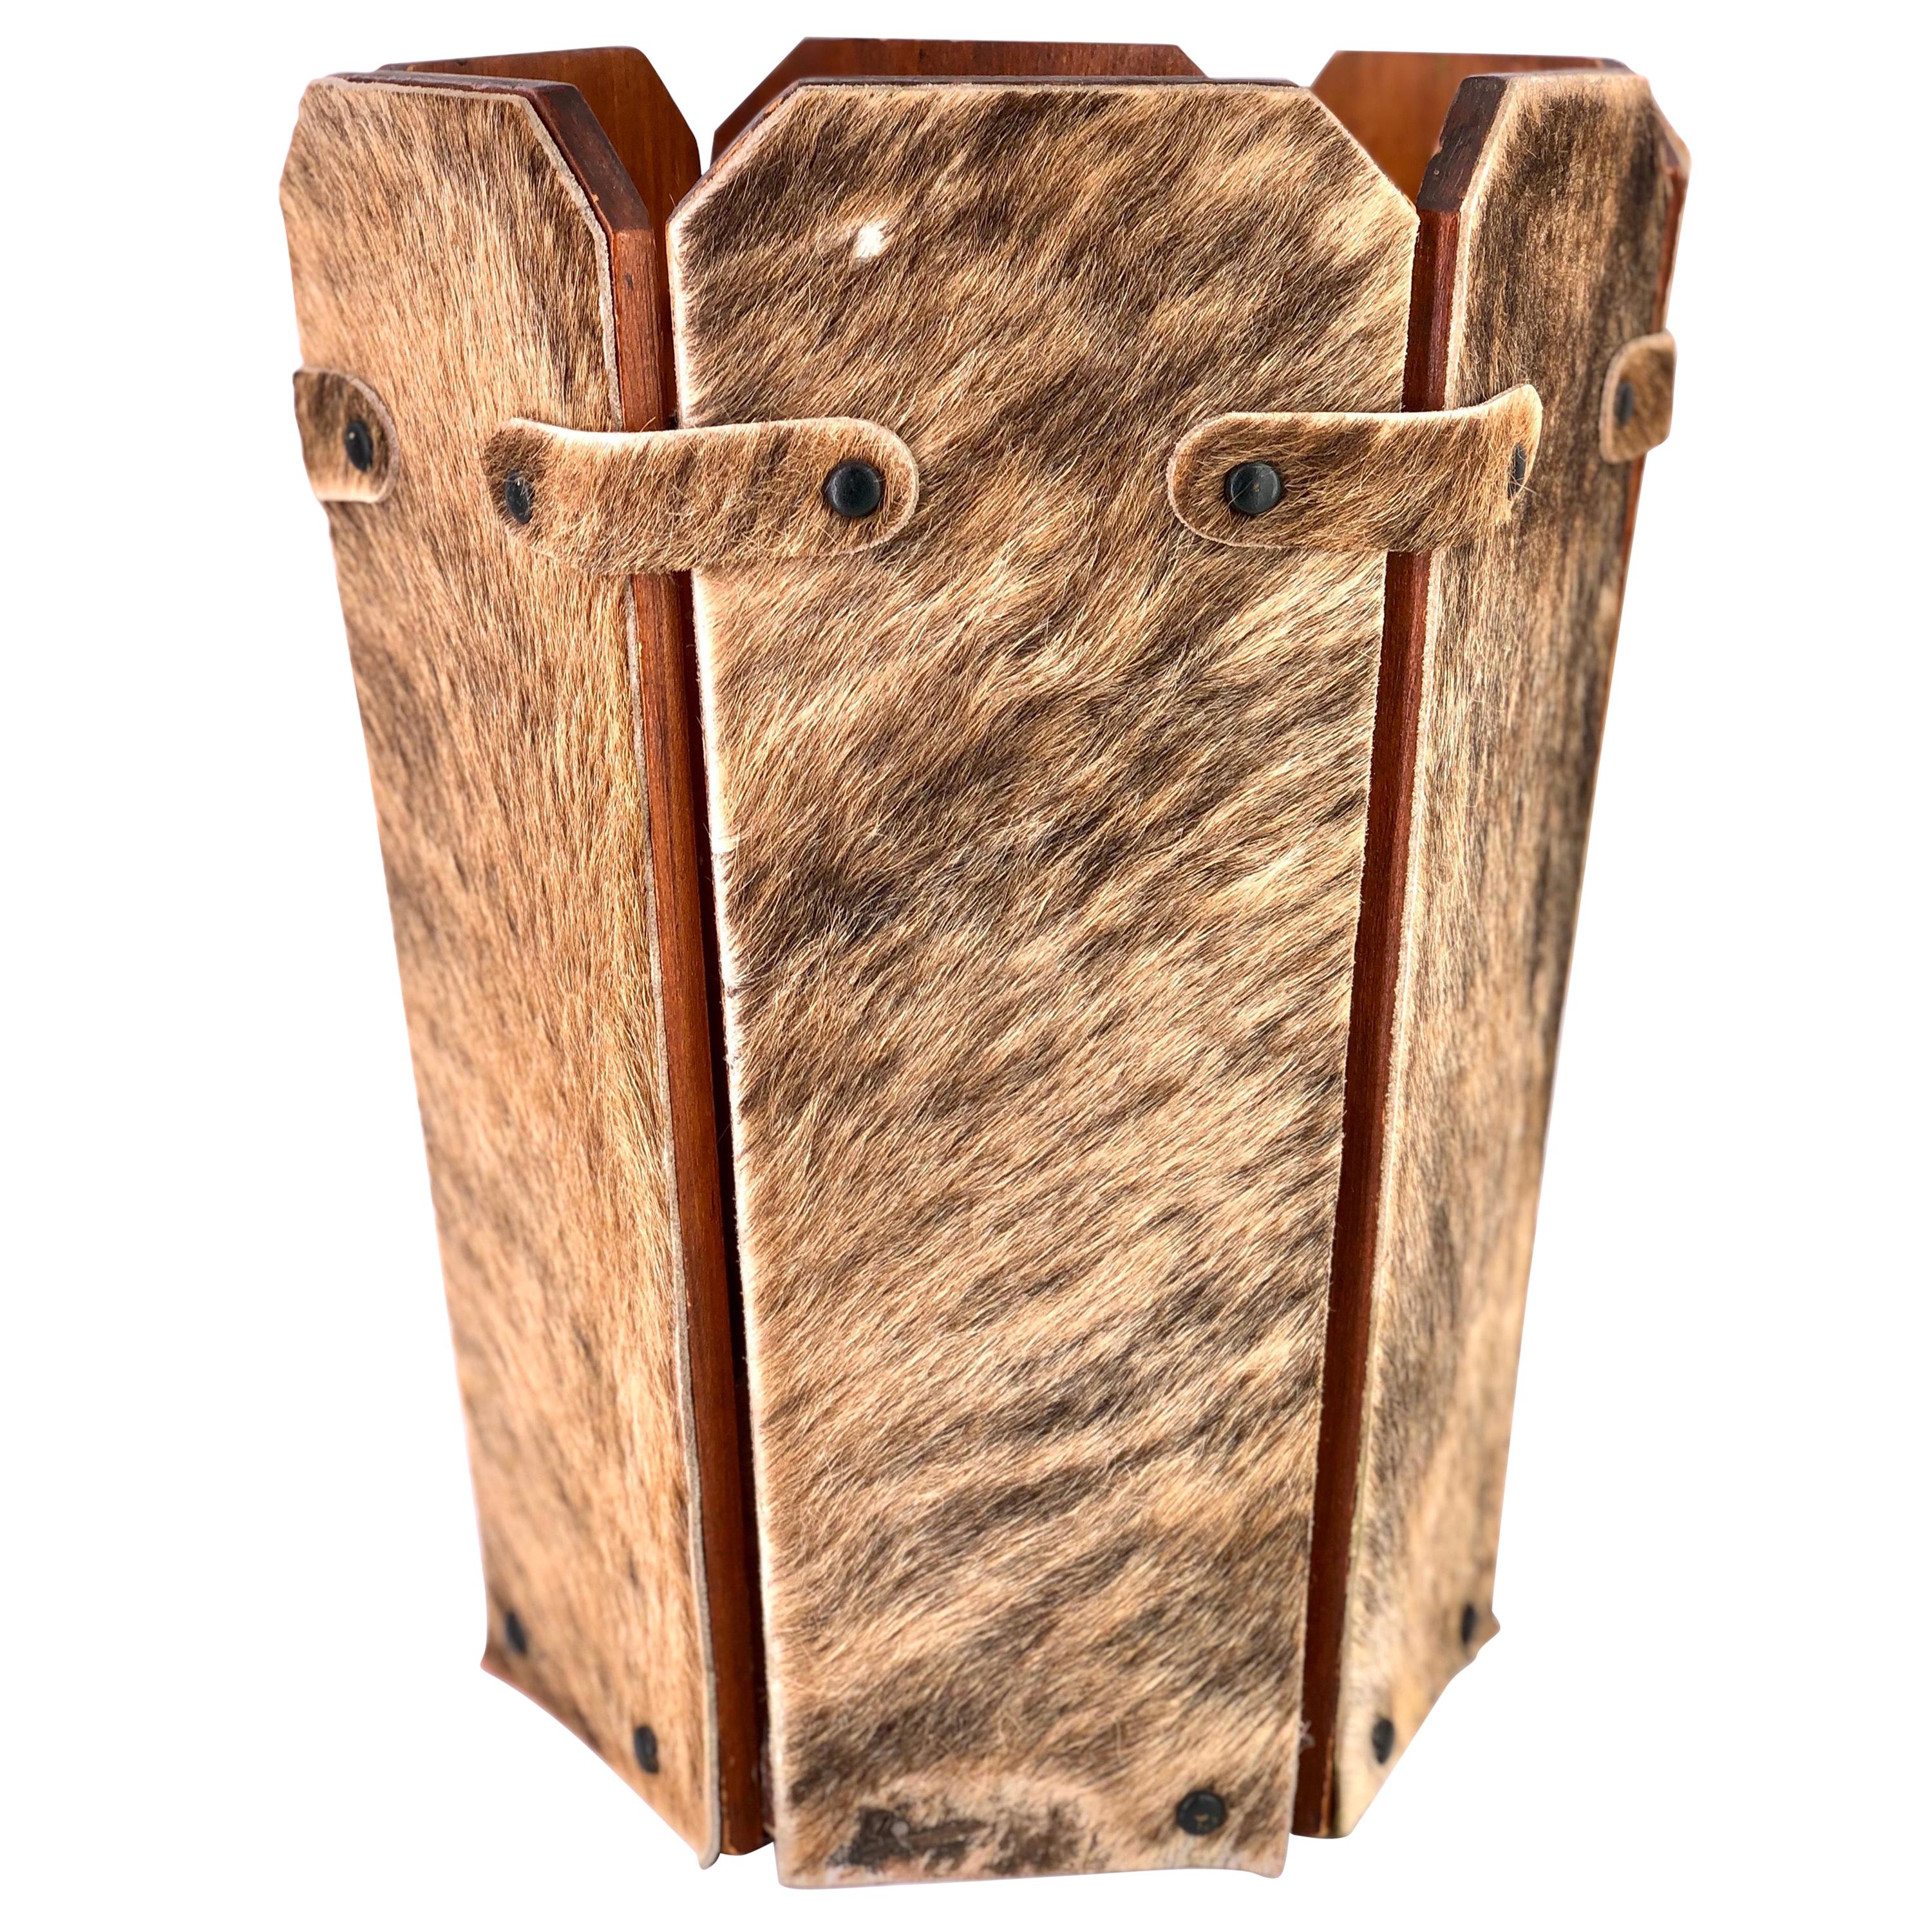 Antique Wood Cowhide Covered Rustic Waste Basket